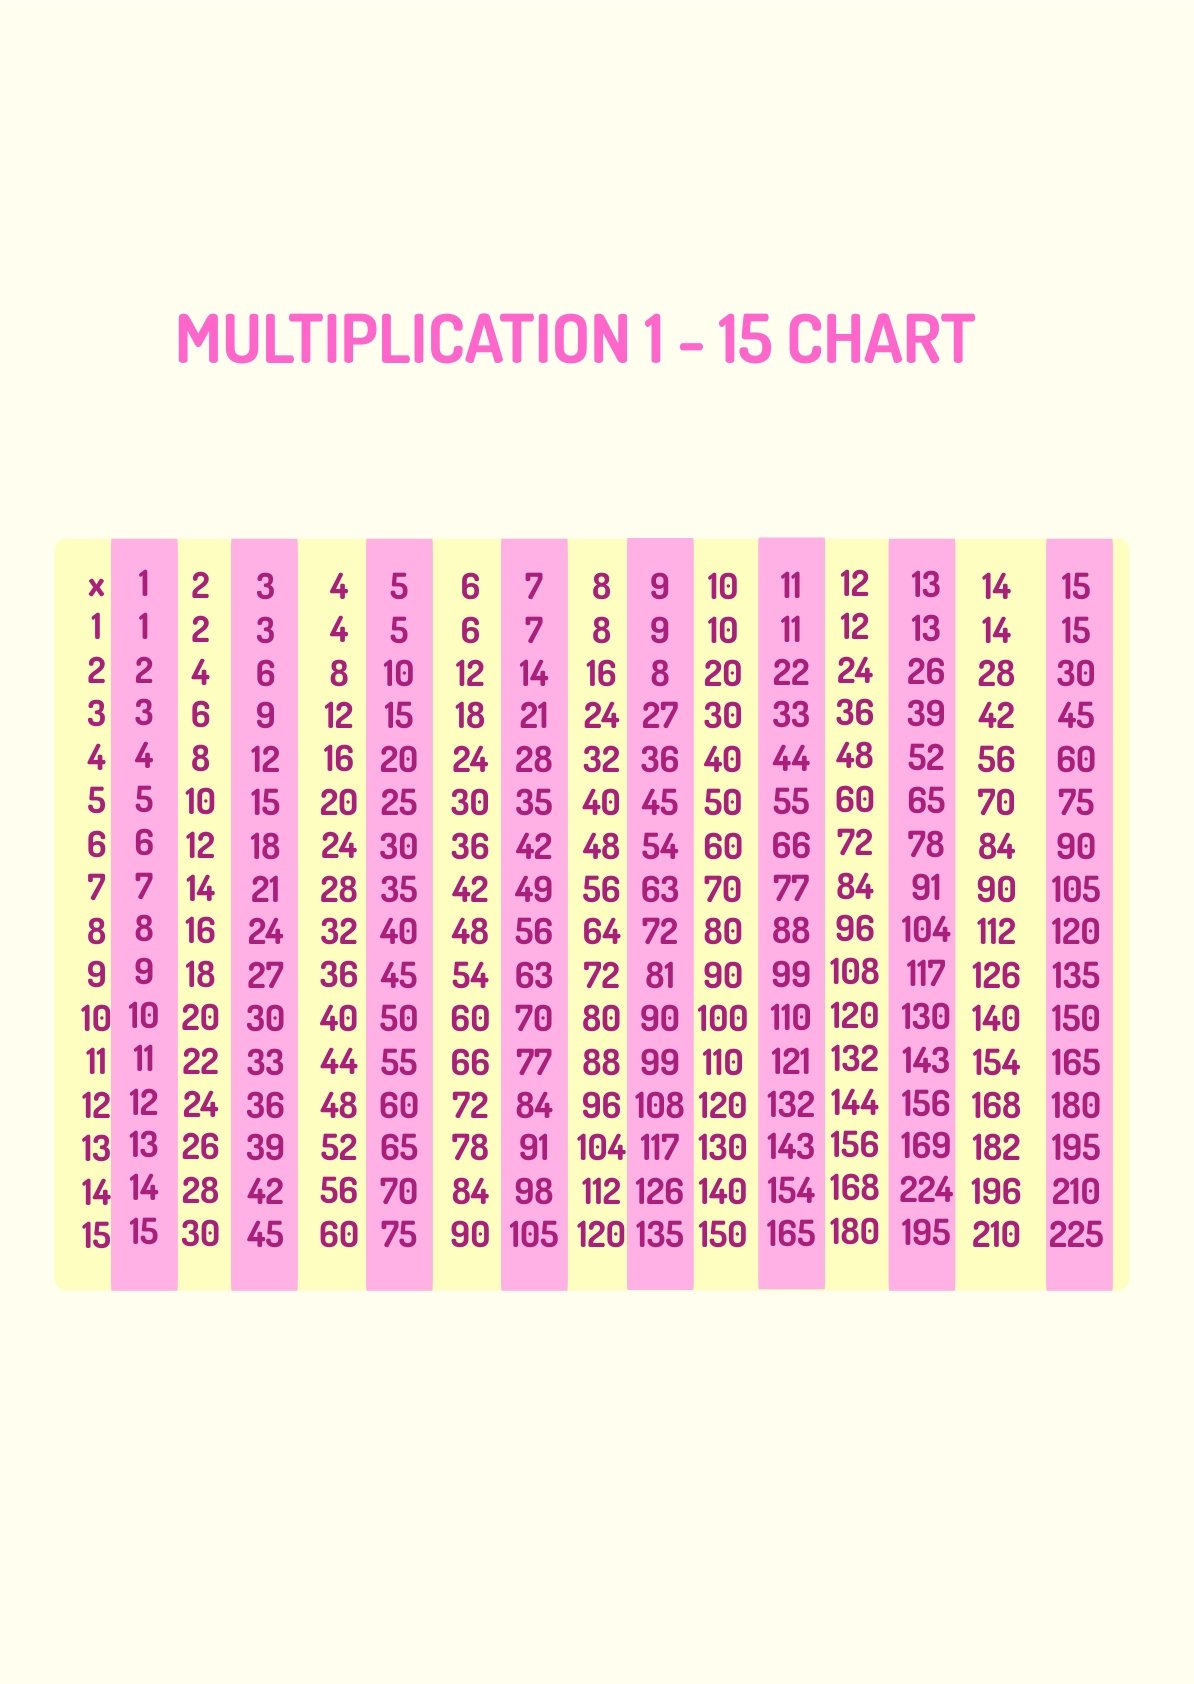 free-multiplication-chart-1-15-download-in-pdf-illustrator